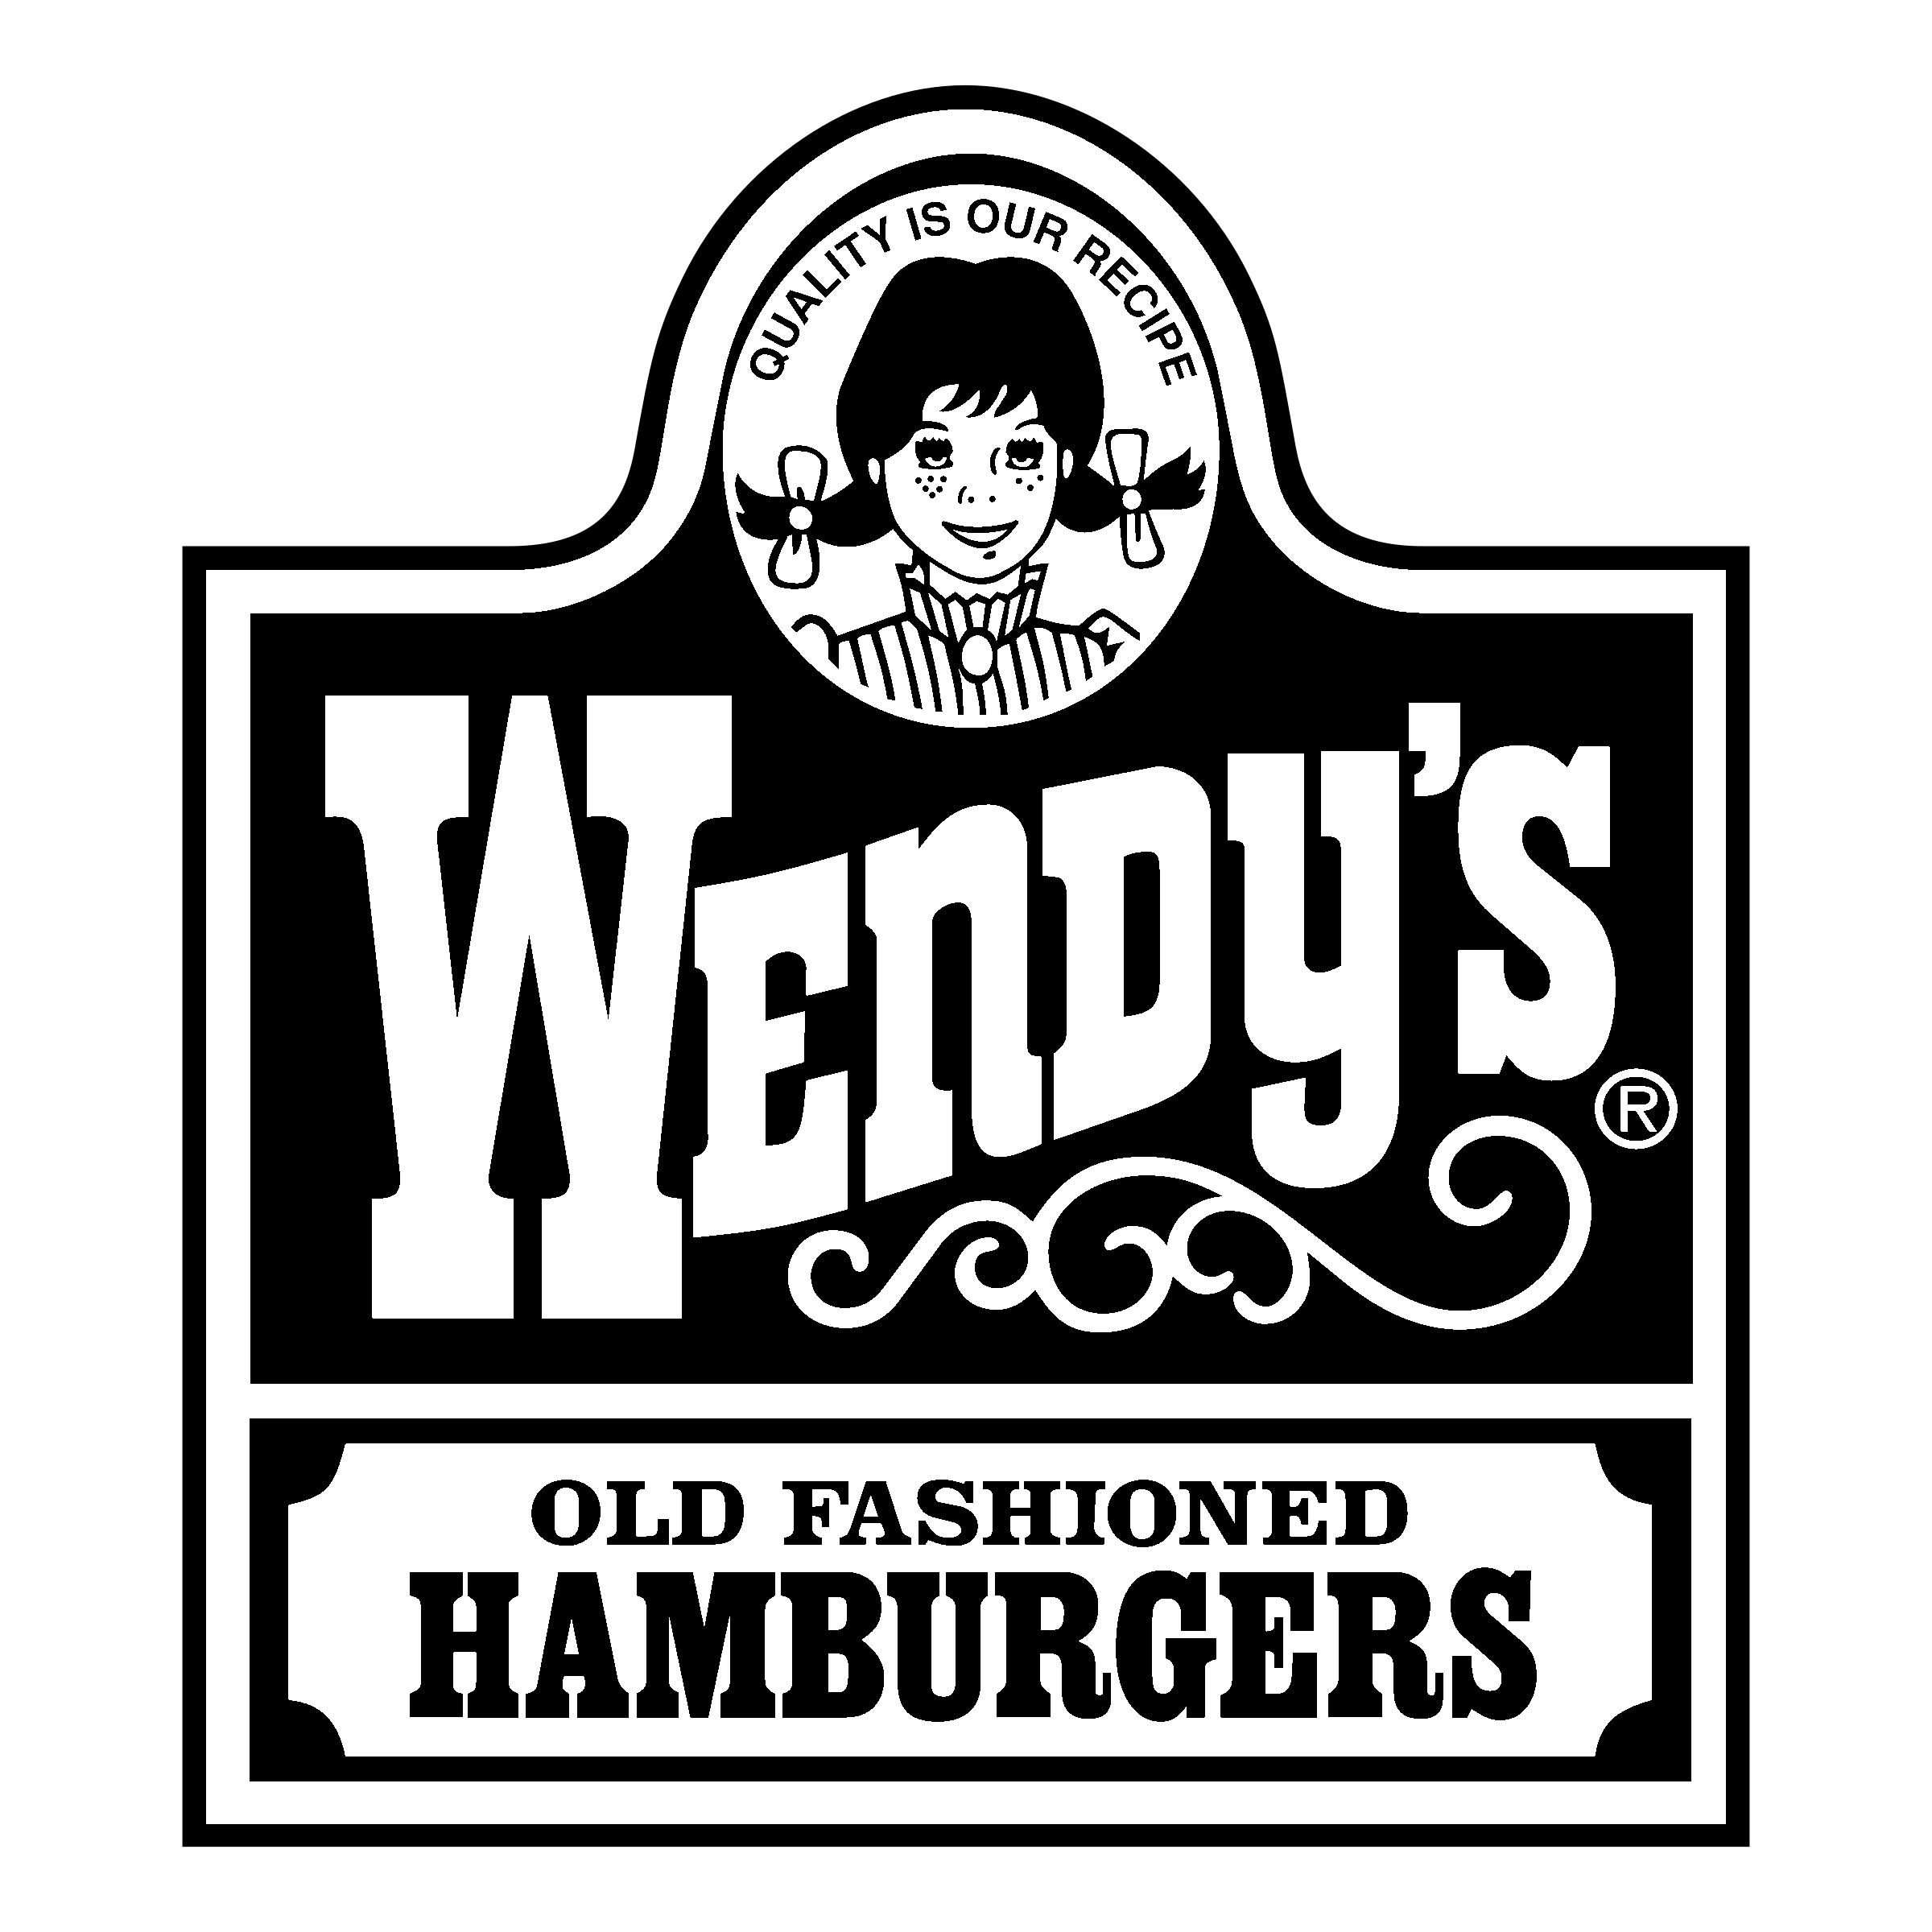 Wendy’s Logo PNG Image